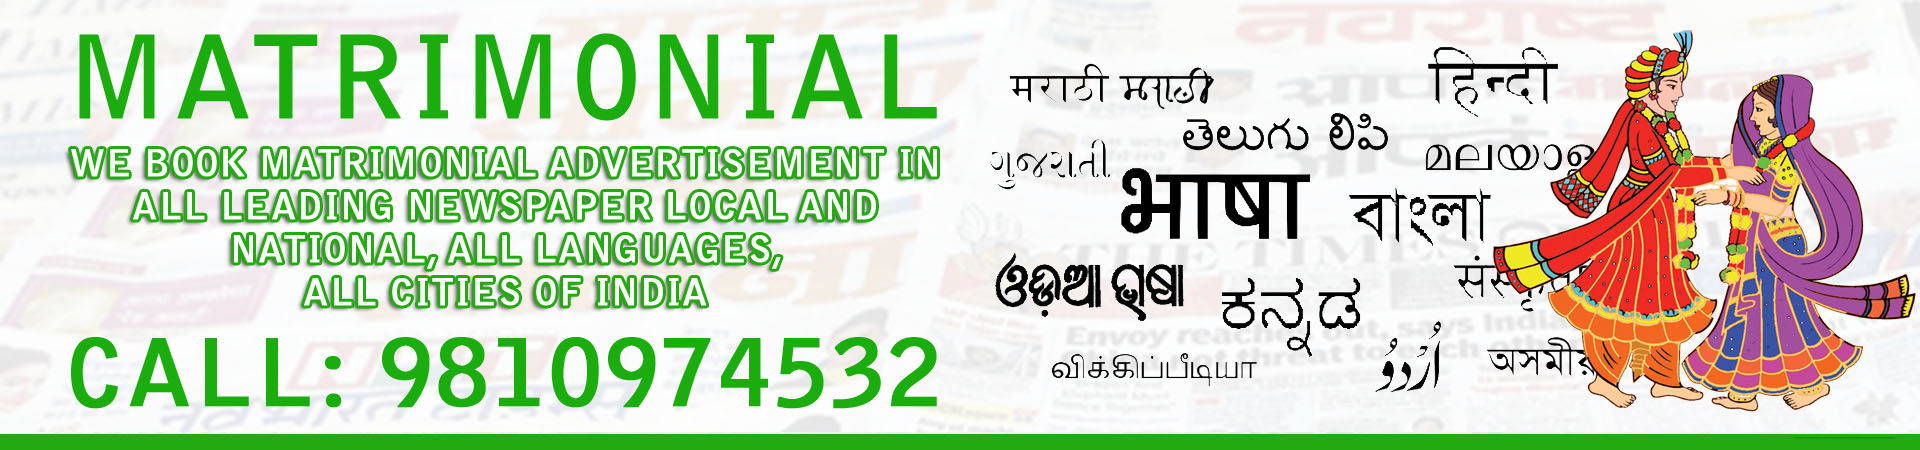 Book Matrimonial Ad in Ajit Newspaper